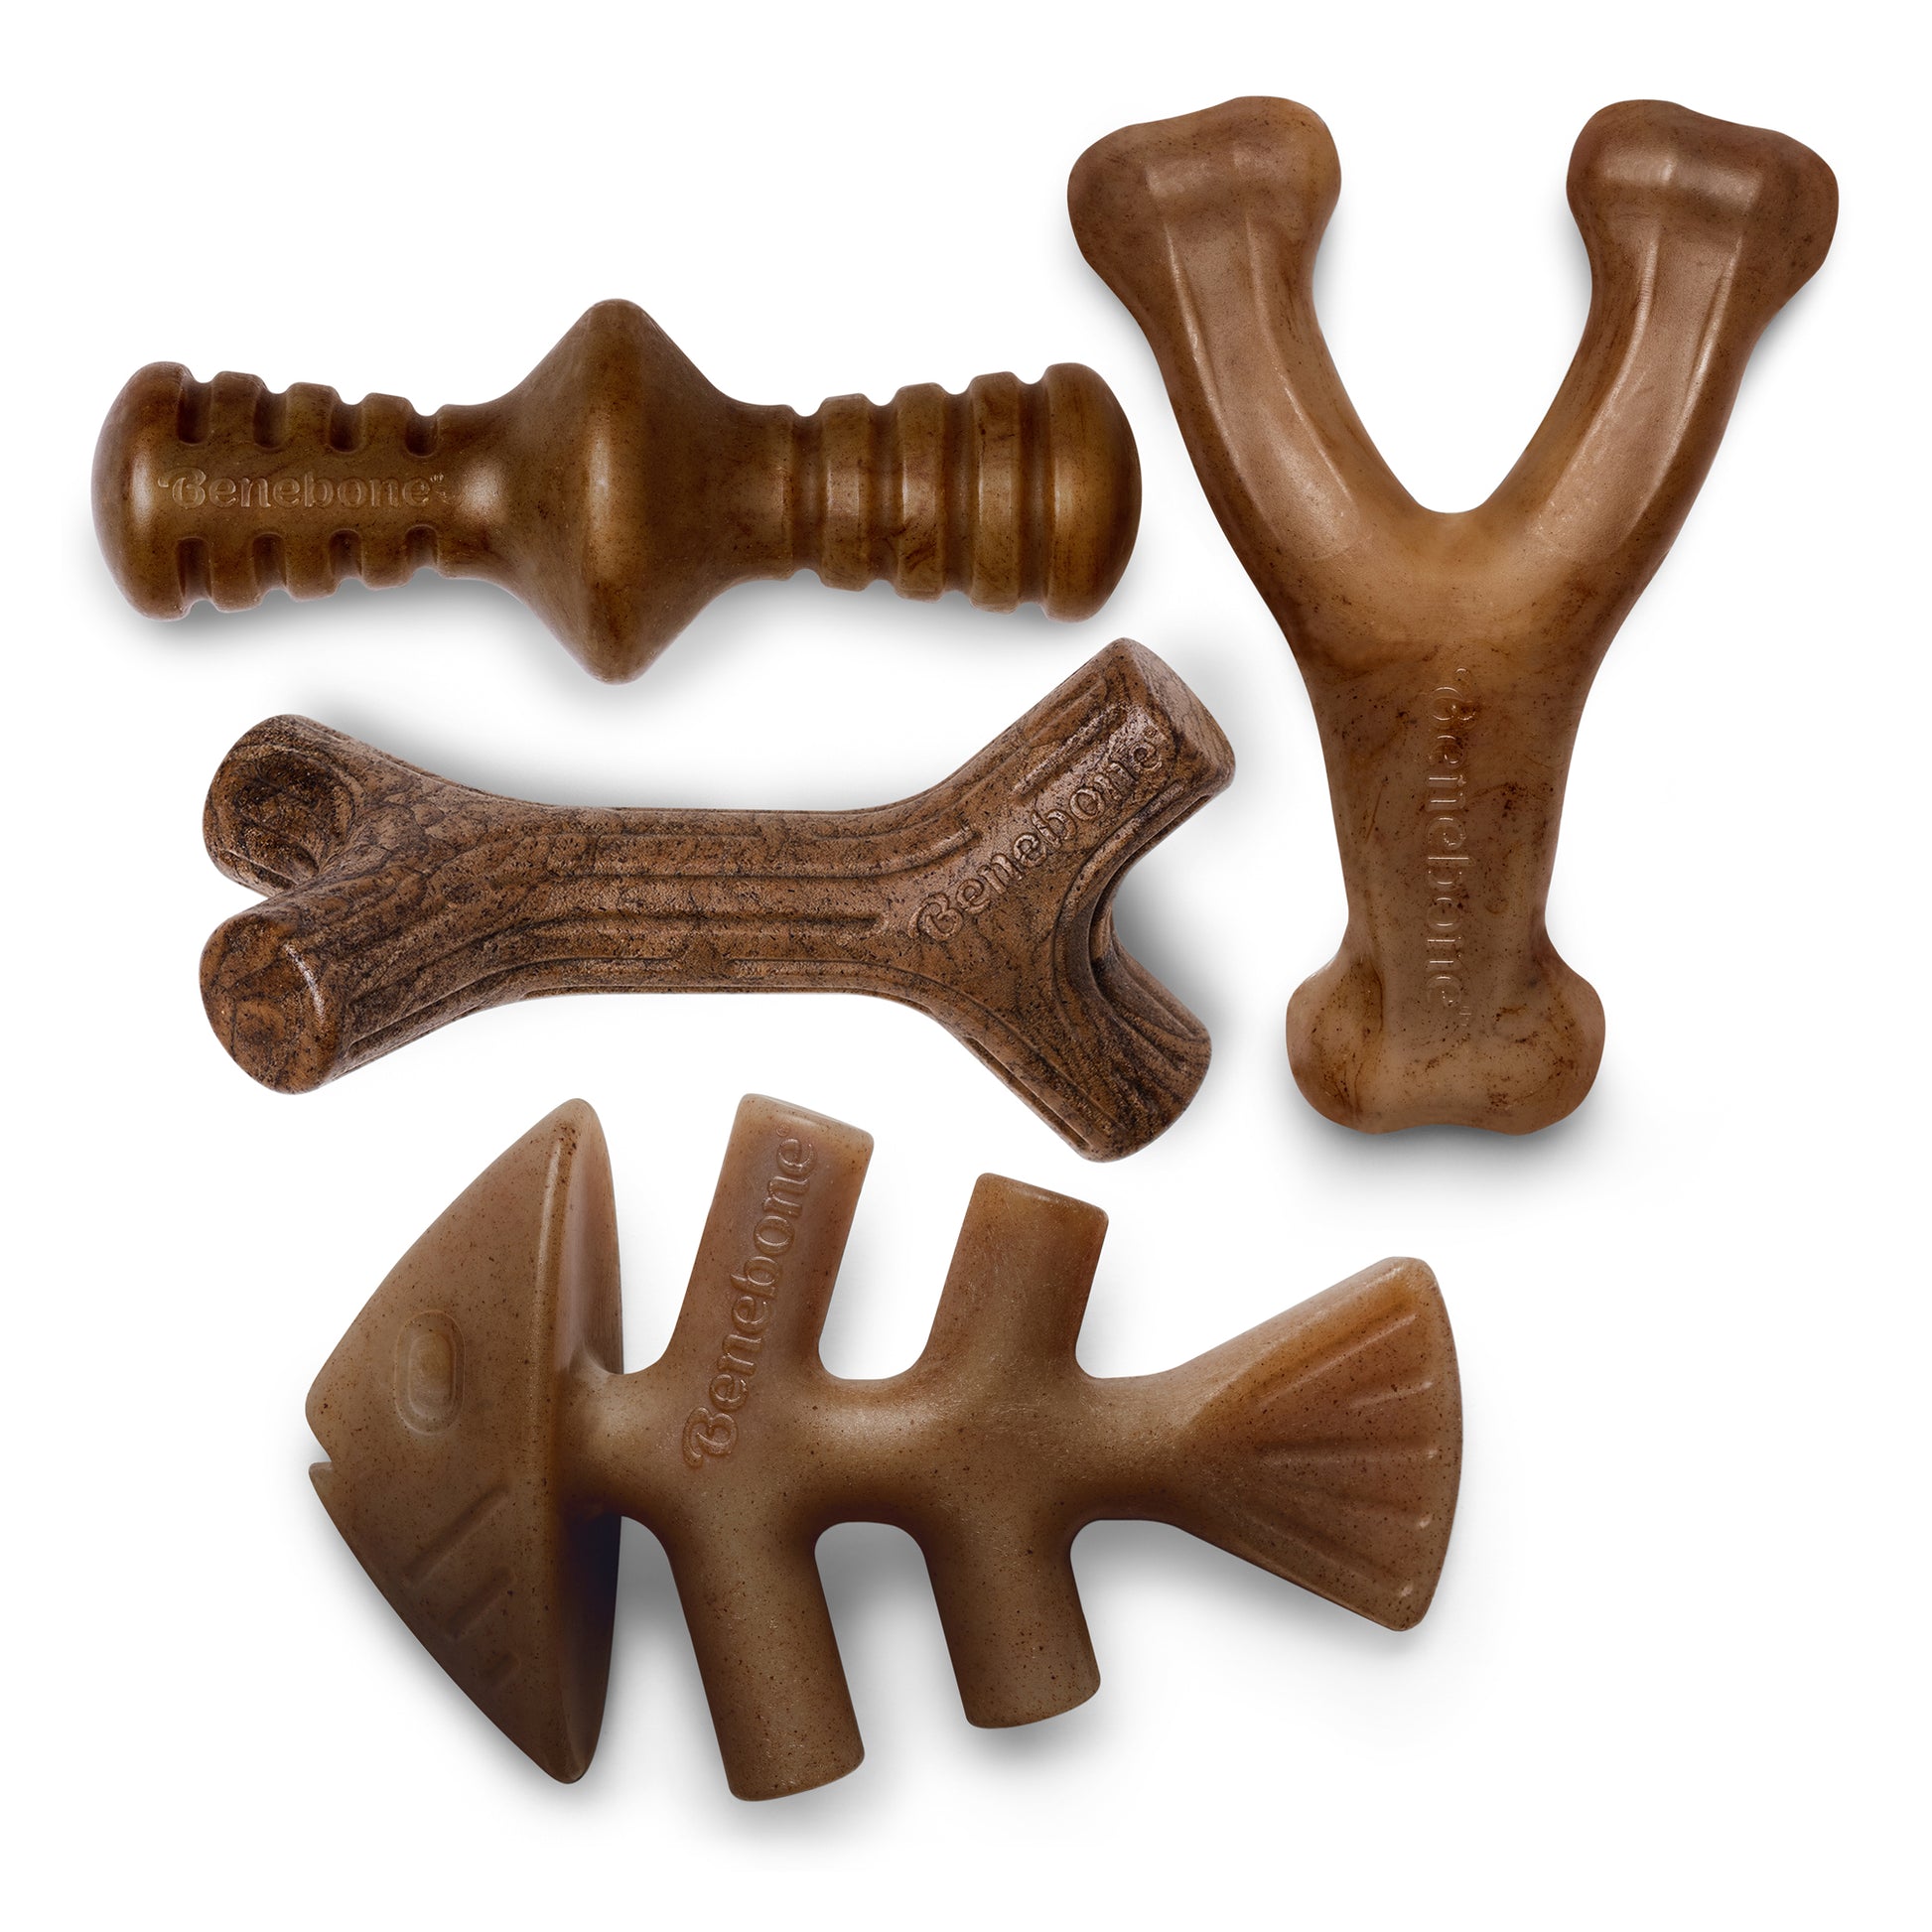 Benebone wishbone, maplestick, fishbone and zaggler